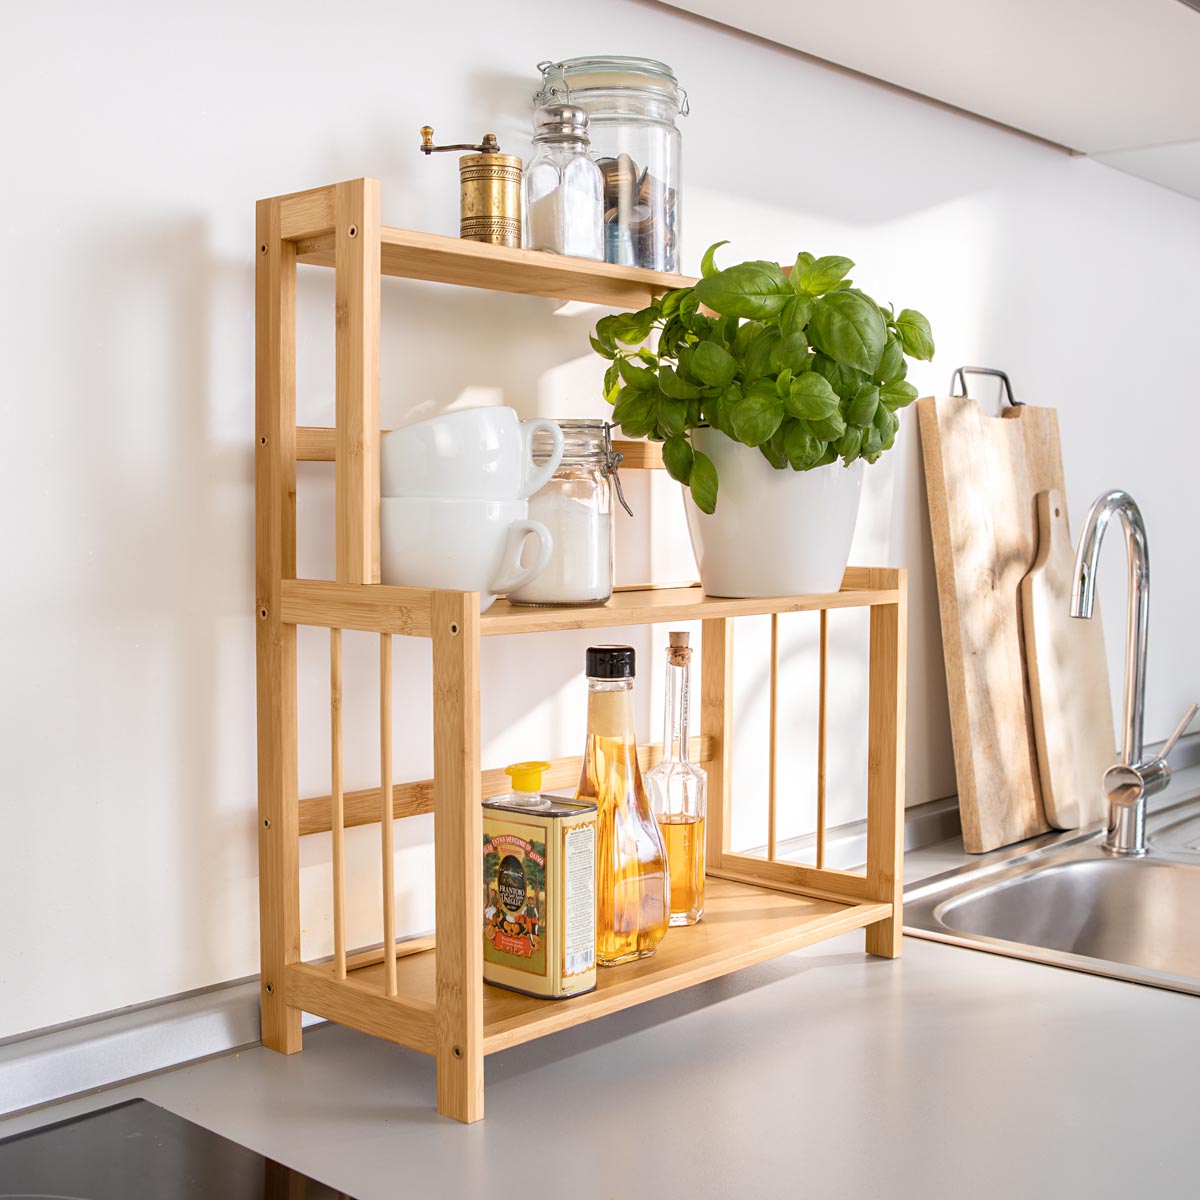 Die moderne Hausfrau Bambusová kuchyňská police, třípatrová